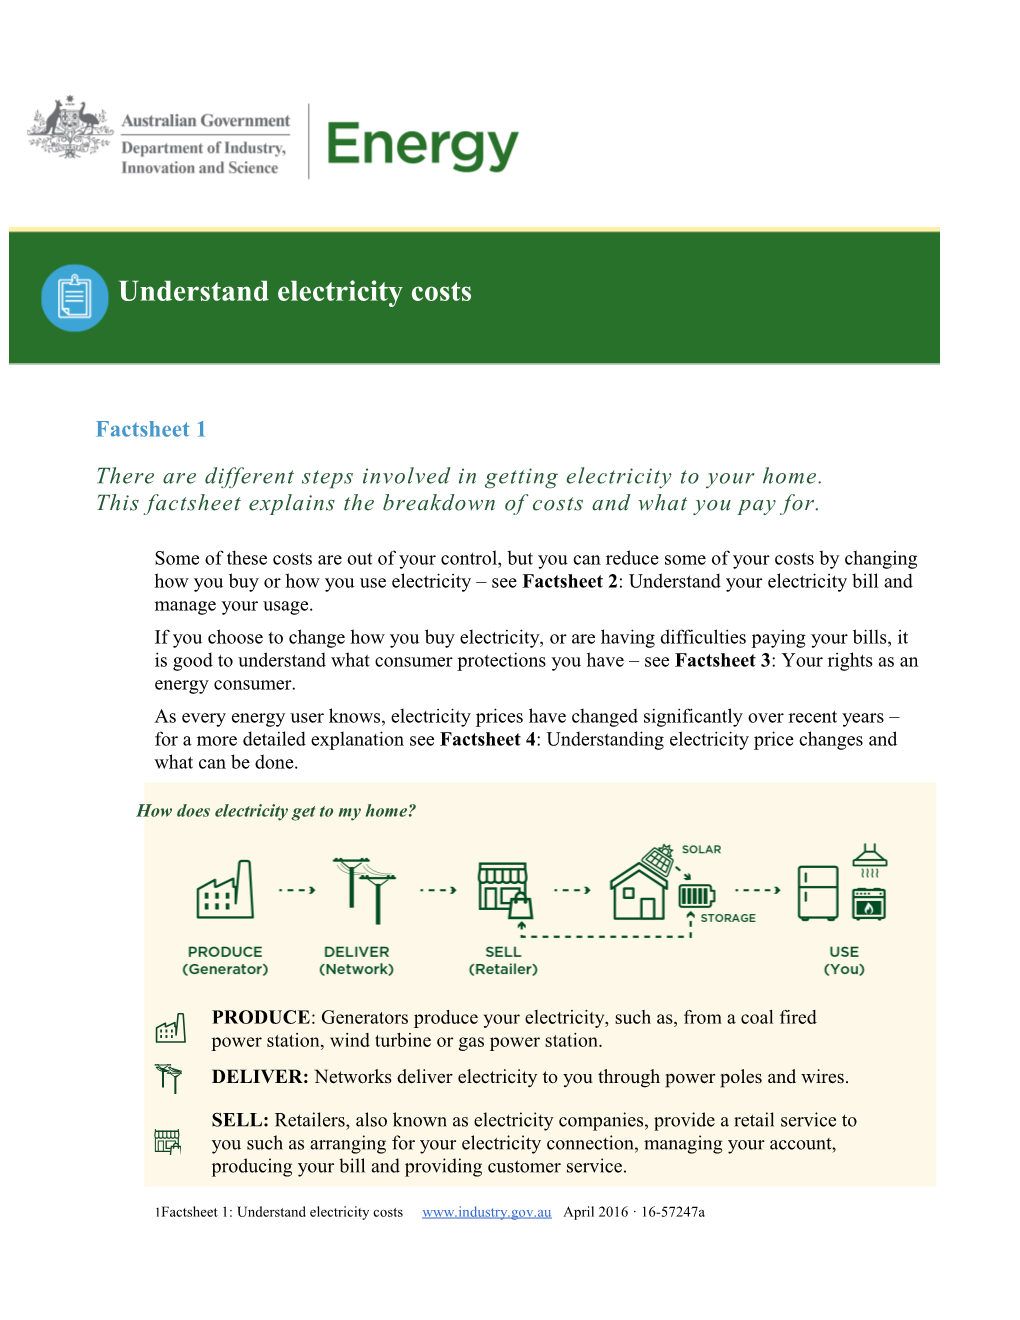 Understand Electricity Costs - Factsheet, Apr 2016 (DOCX 2.06 MB)